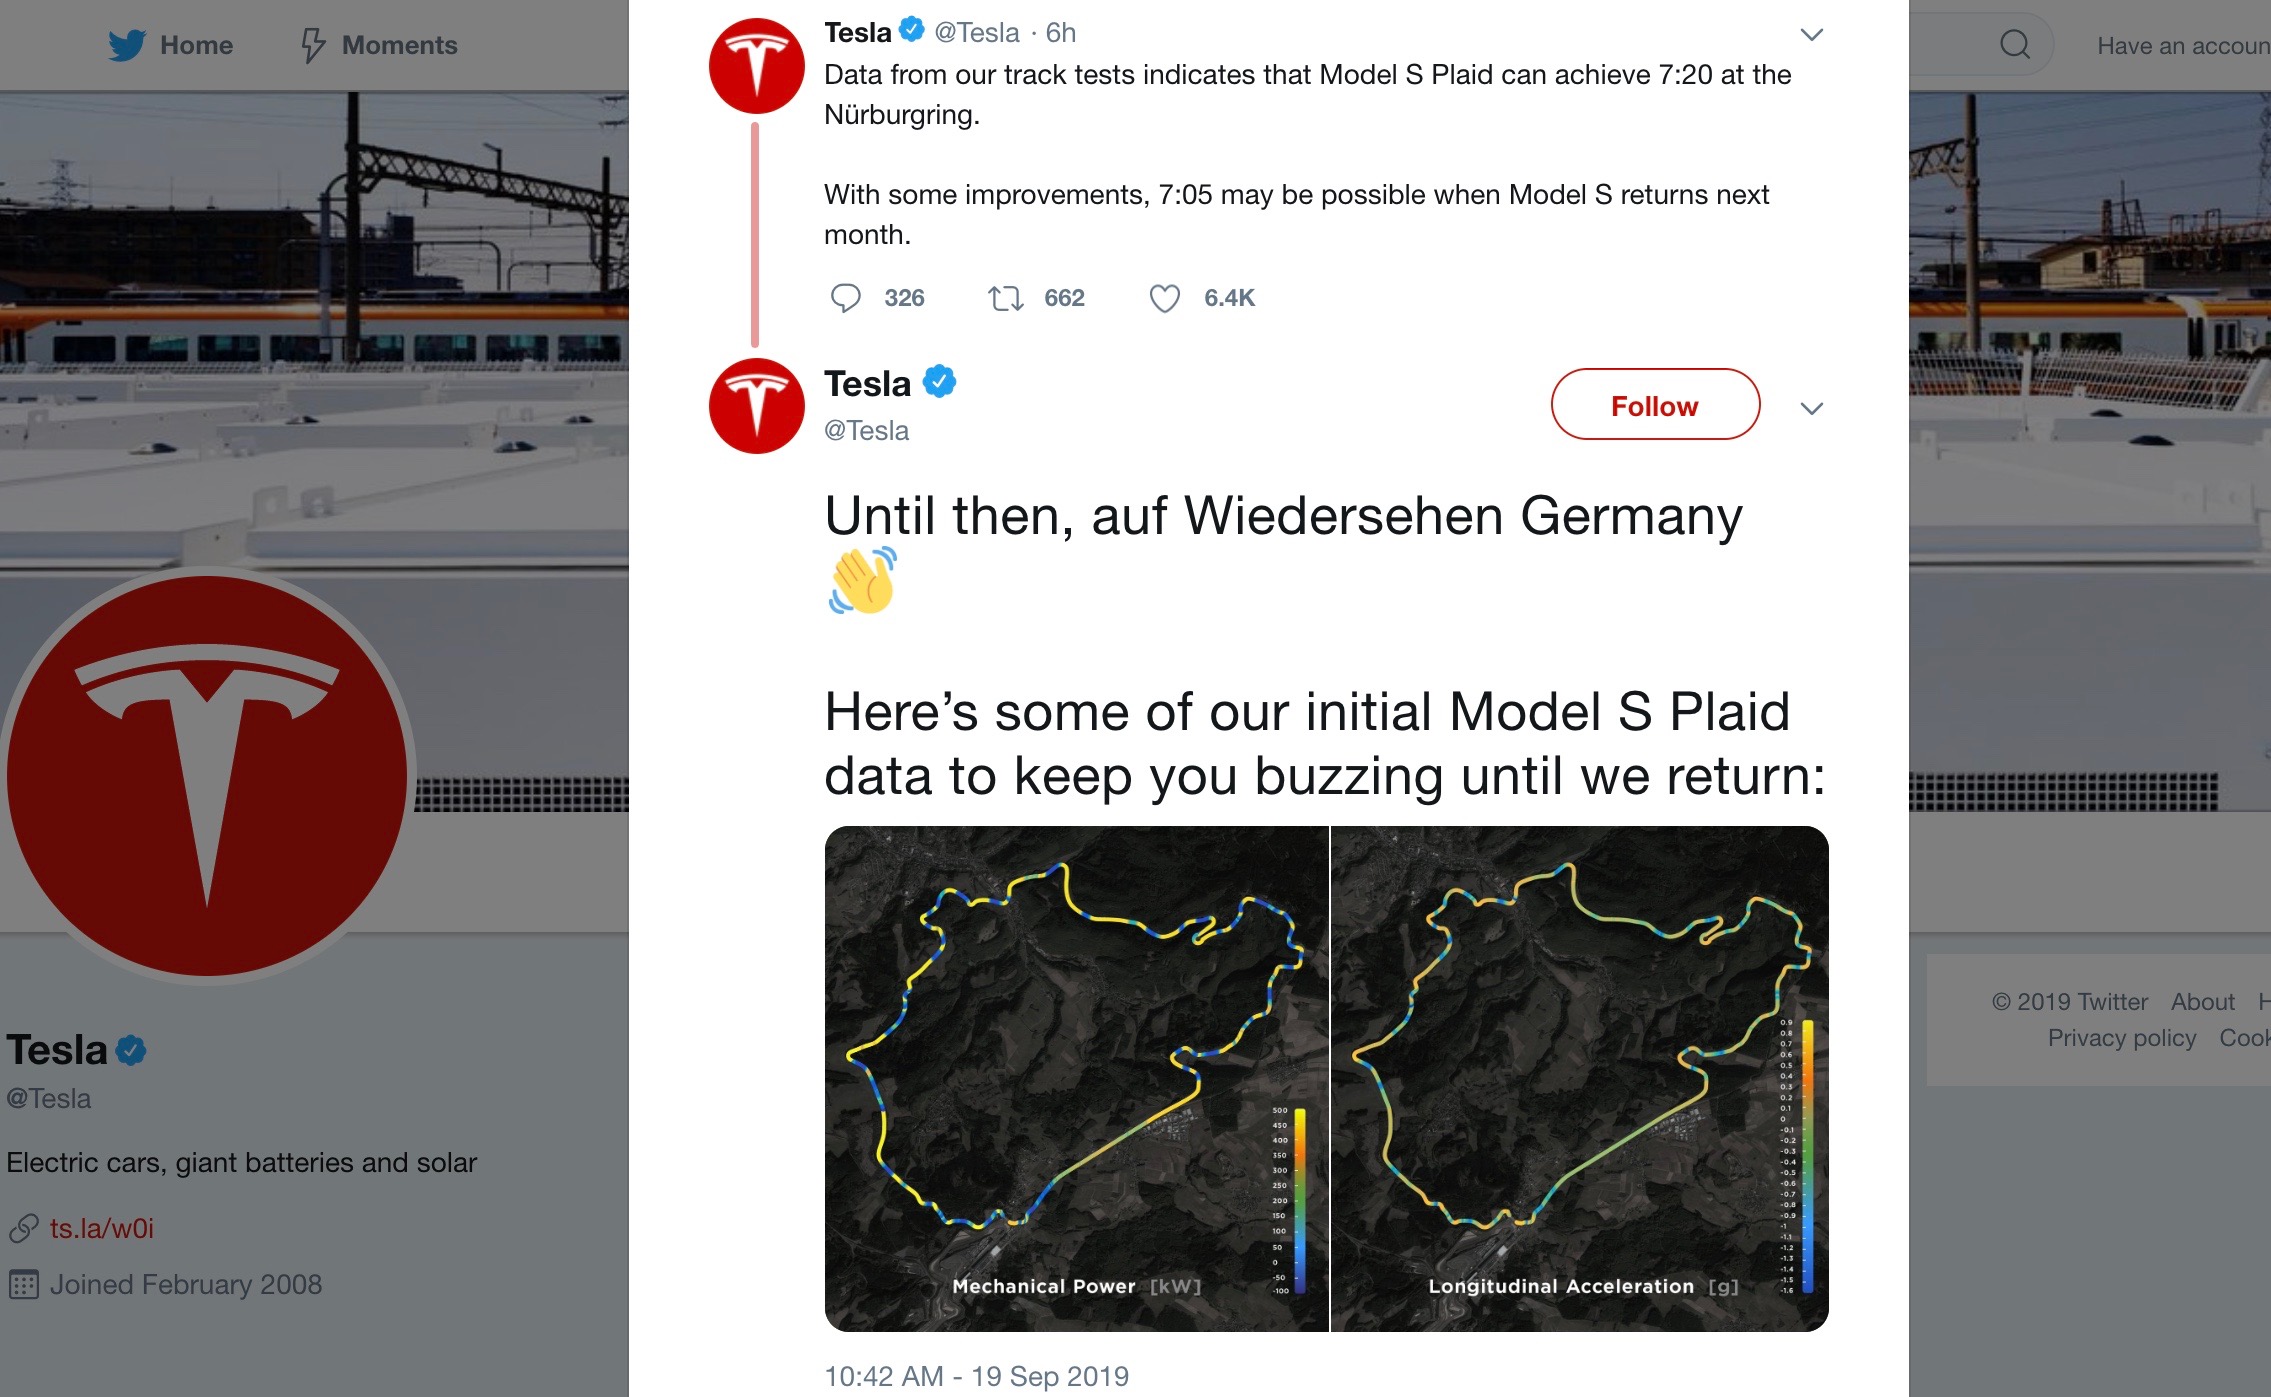 Tesla confirms Model S Plaid laps Nurburgring in 7:20